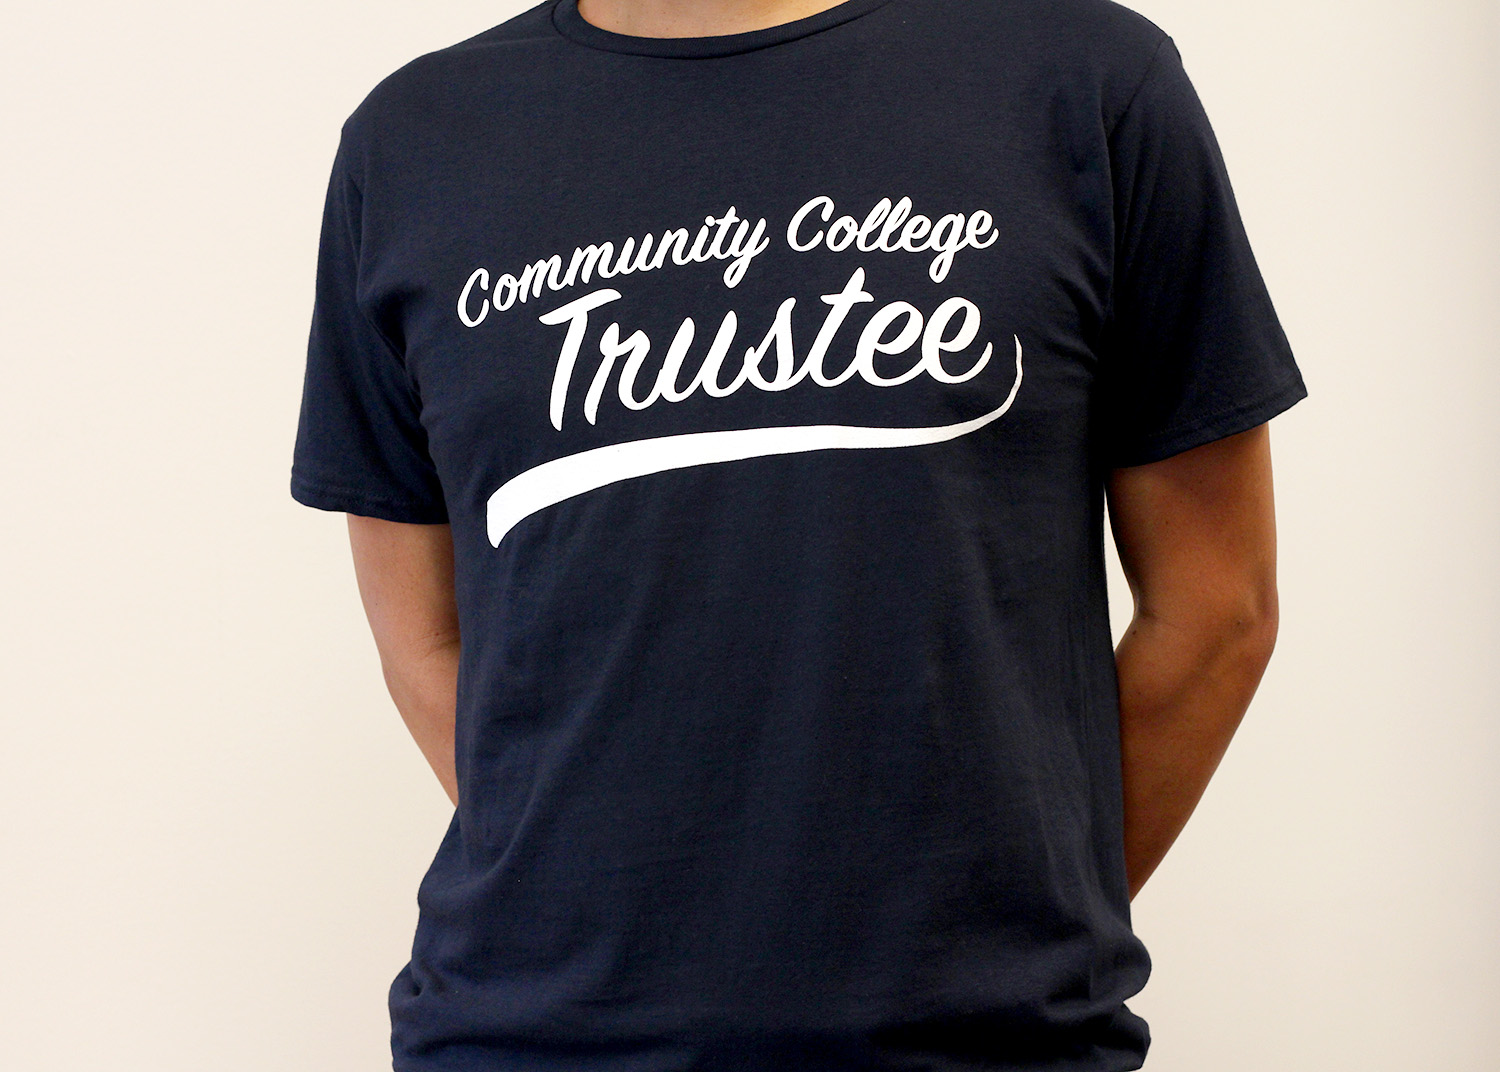 Unisex ACCT Community College Trustee Tee Shirt - Size S